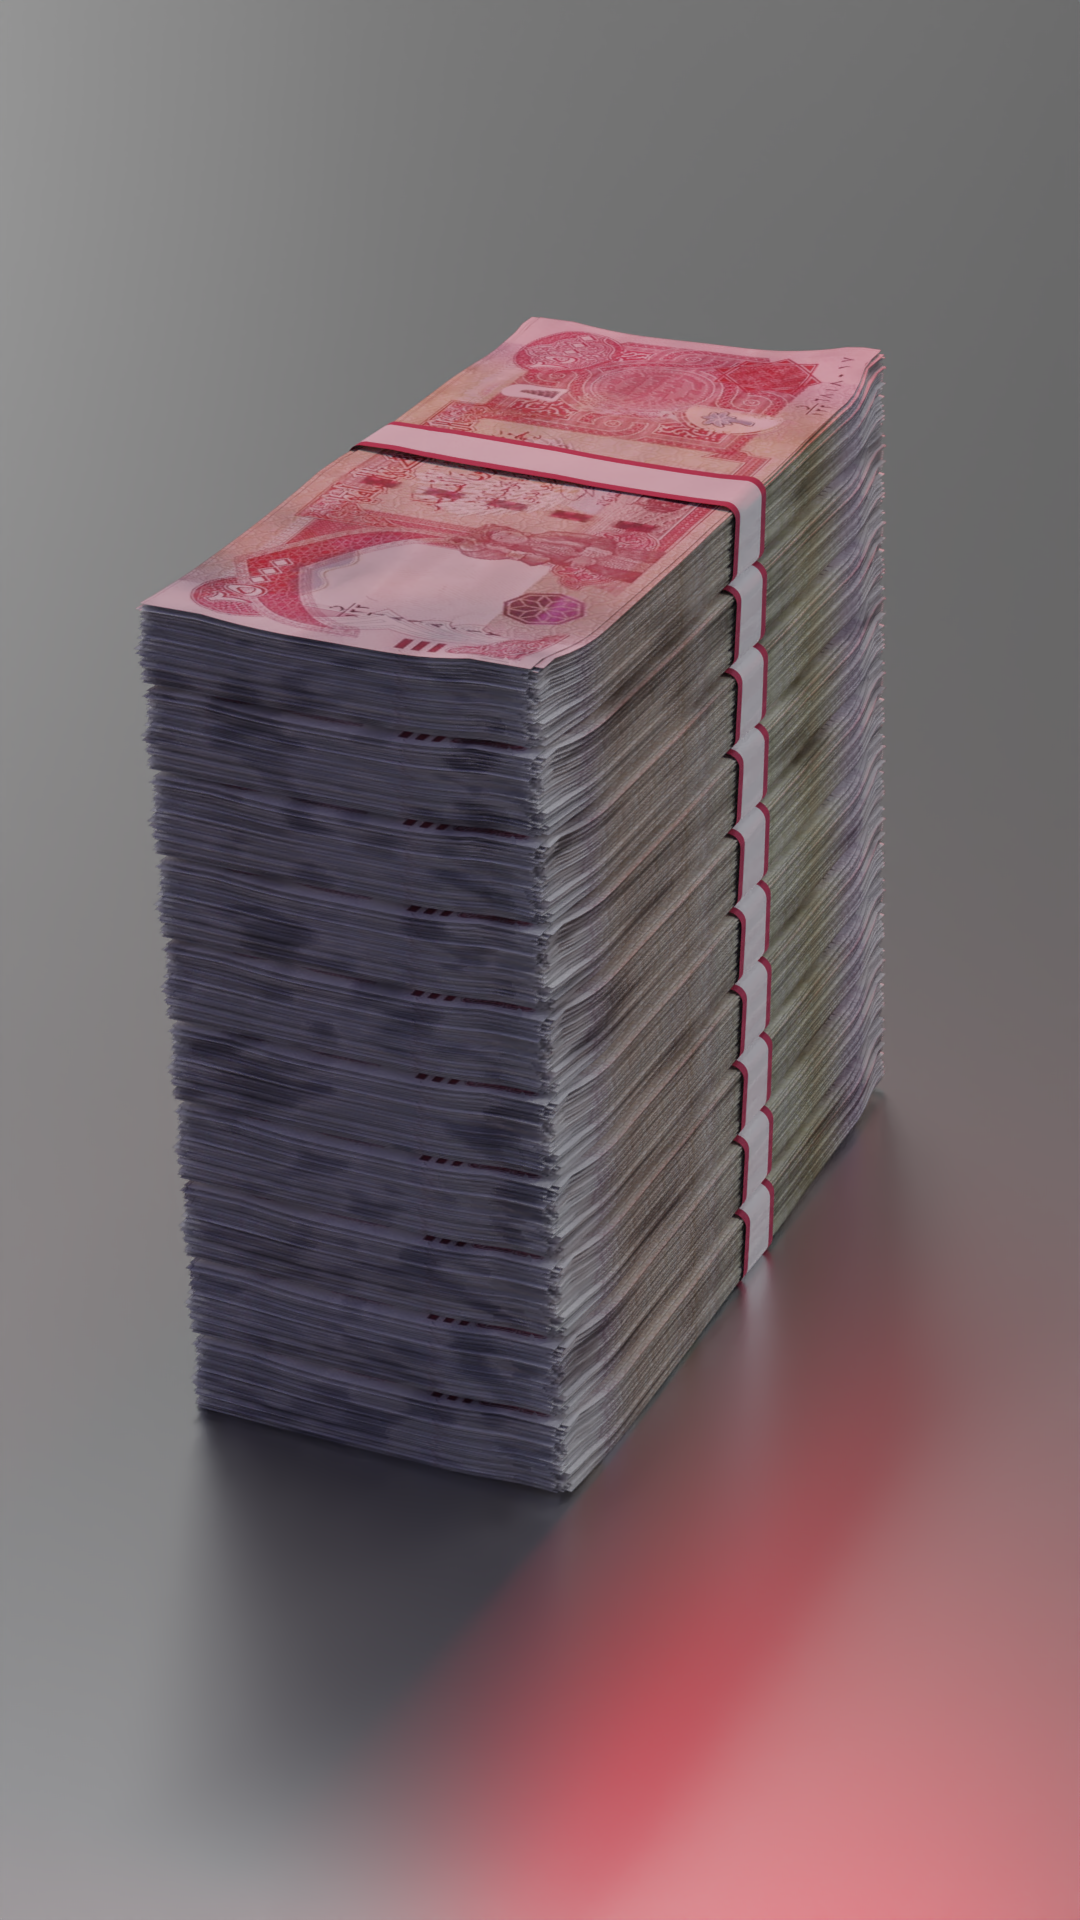 Iraqi Money 25,000 Dinars preview image 1